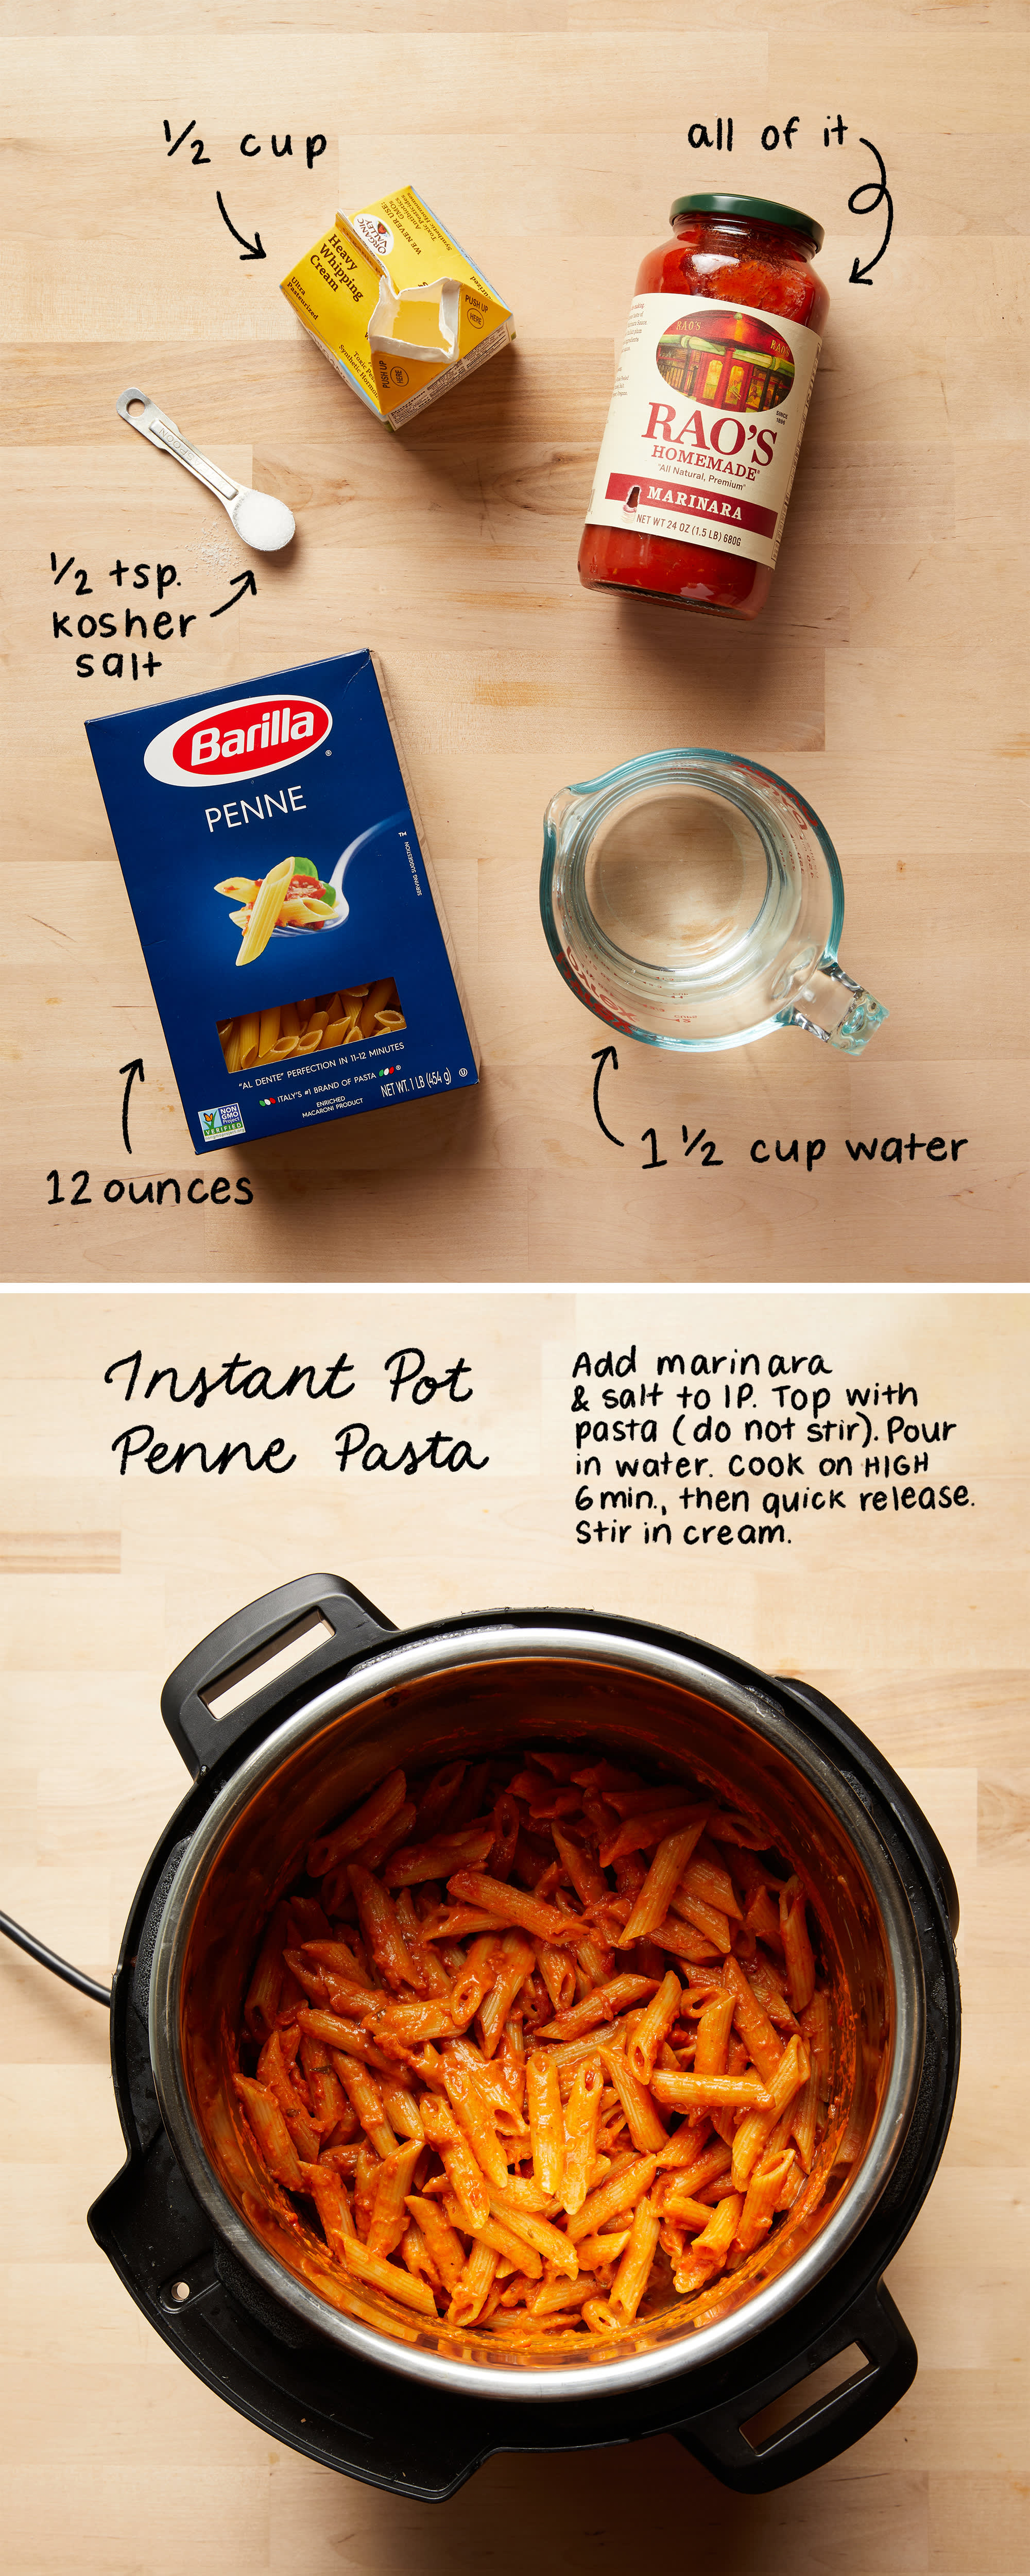 https://cdn.apartmenttherapy.info/image/upload/v1614959400/k/Photo/Series/2021-02-snapshot-cooking-five-ingredient-instant-pot-meals/Instant-Pot-Graphics/snapshot-ip-penne-pasta.jpg